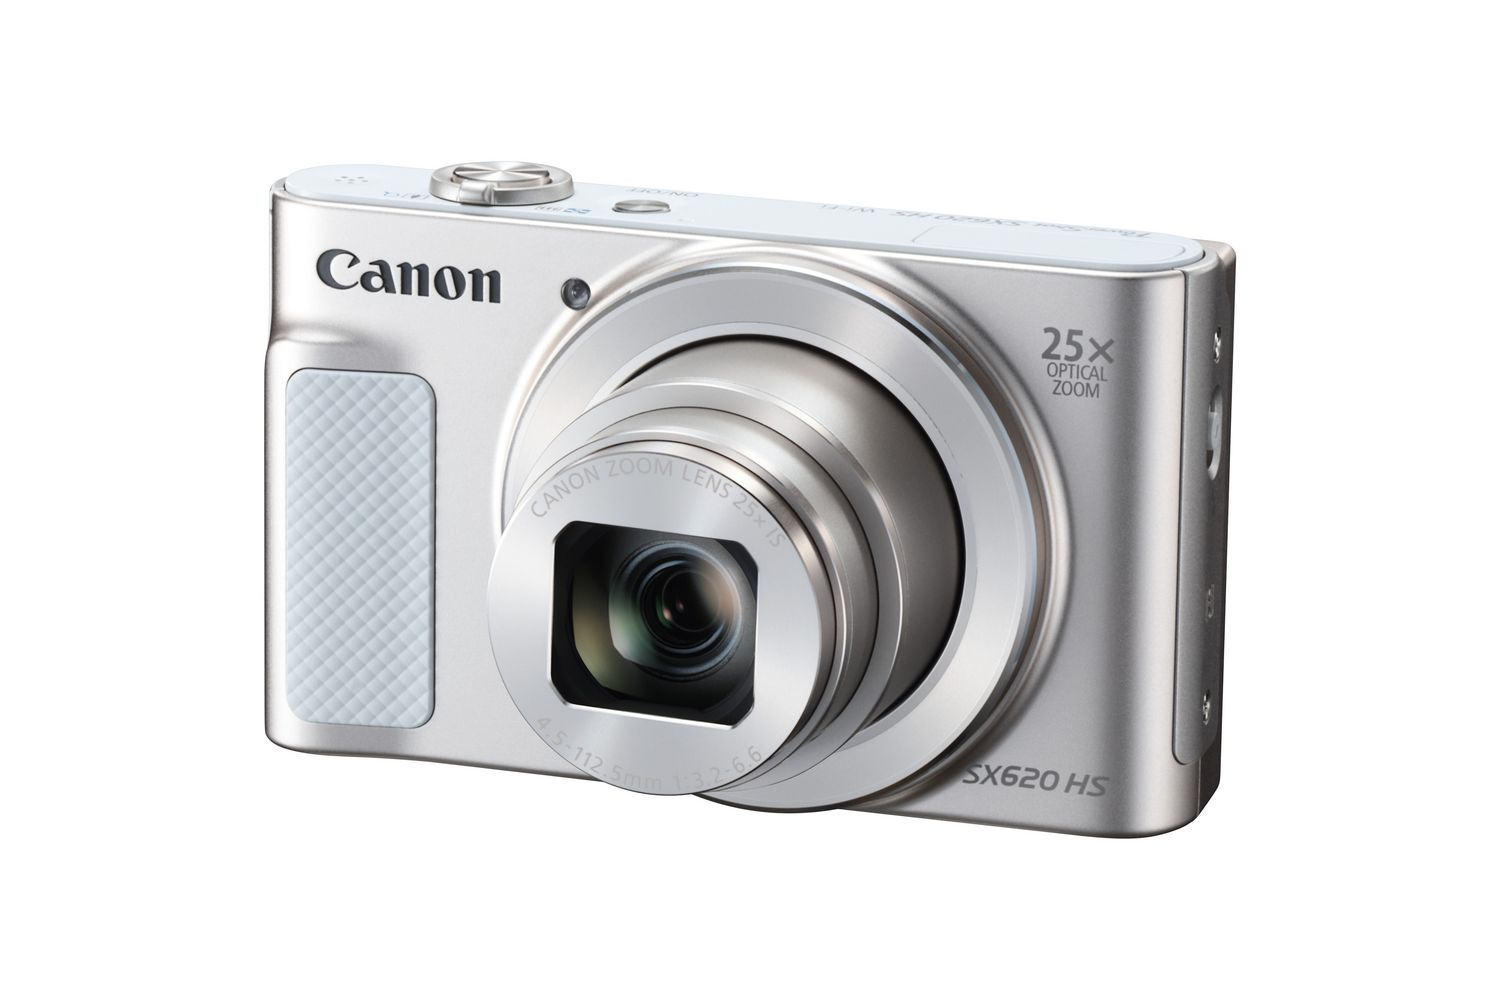 Canon Powershot SX620 Hs Digital Camera | Walmart Canada